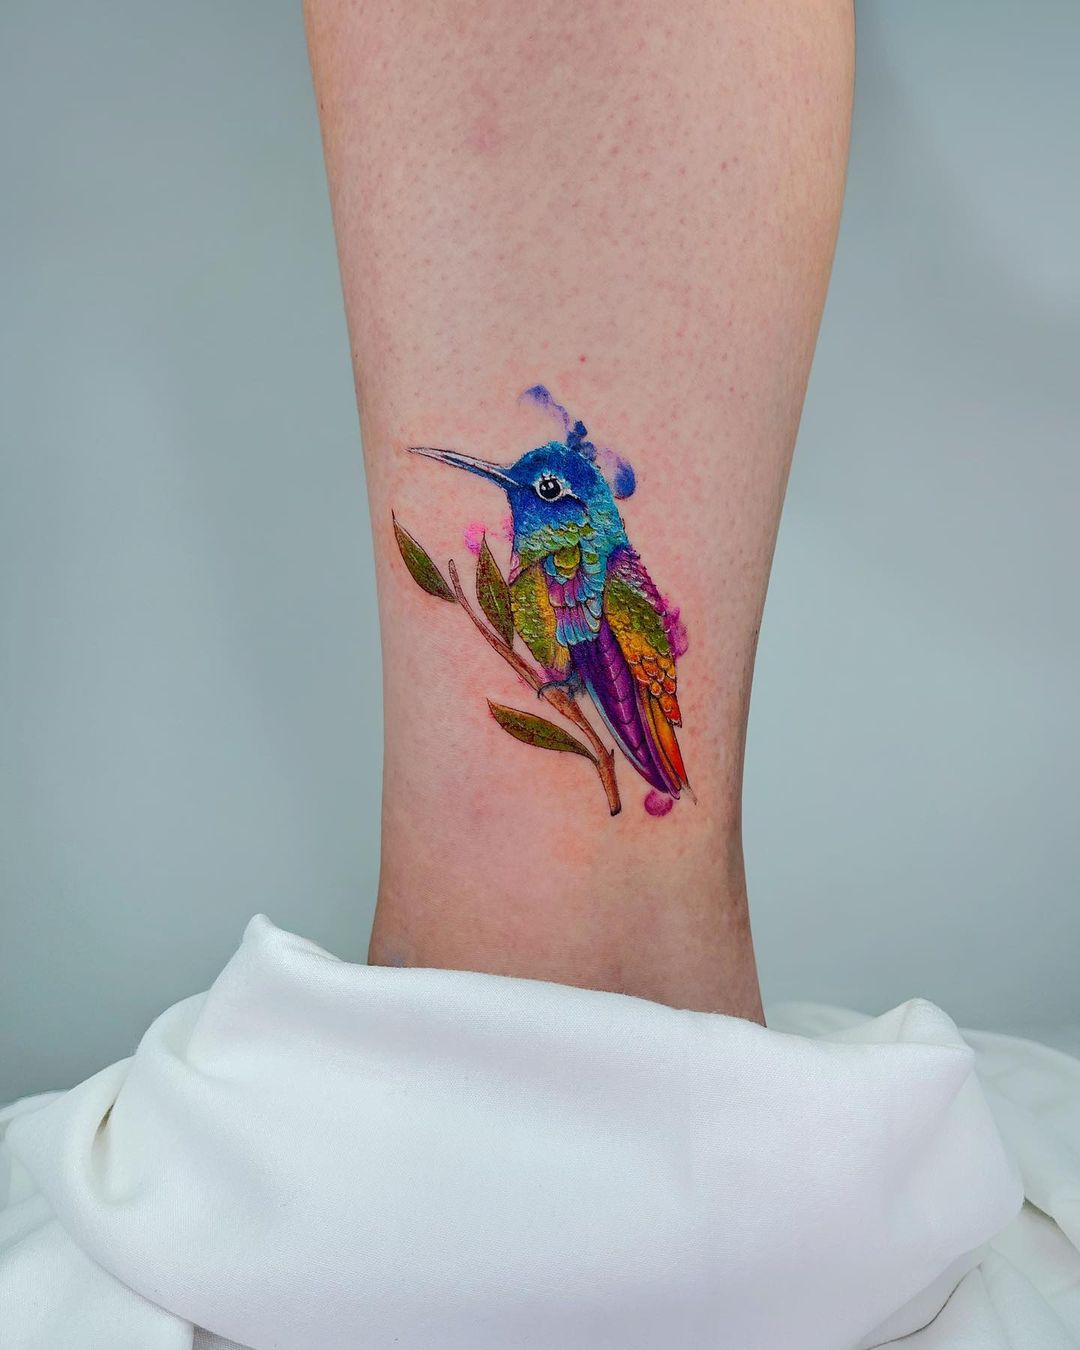 Colorful Hummingbird Tattoo on Ankle